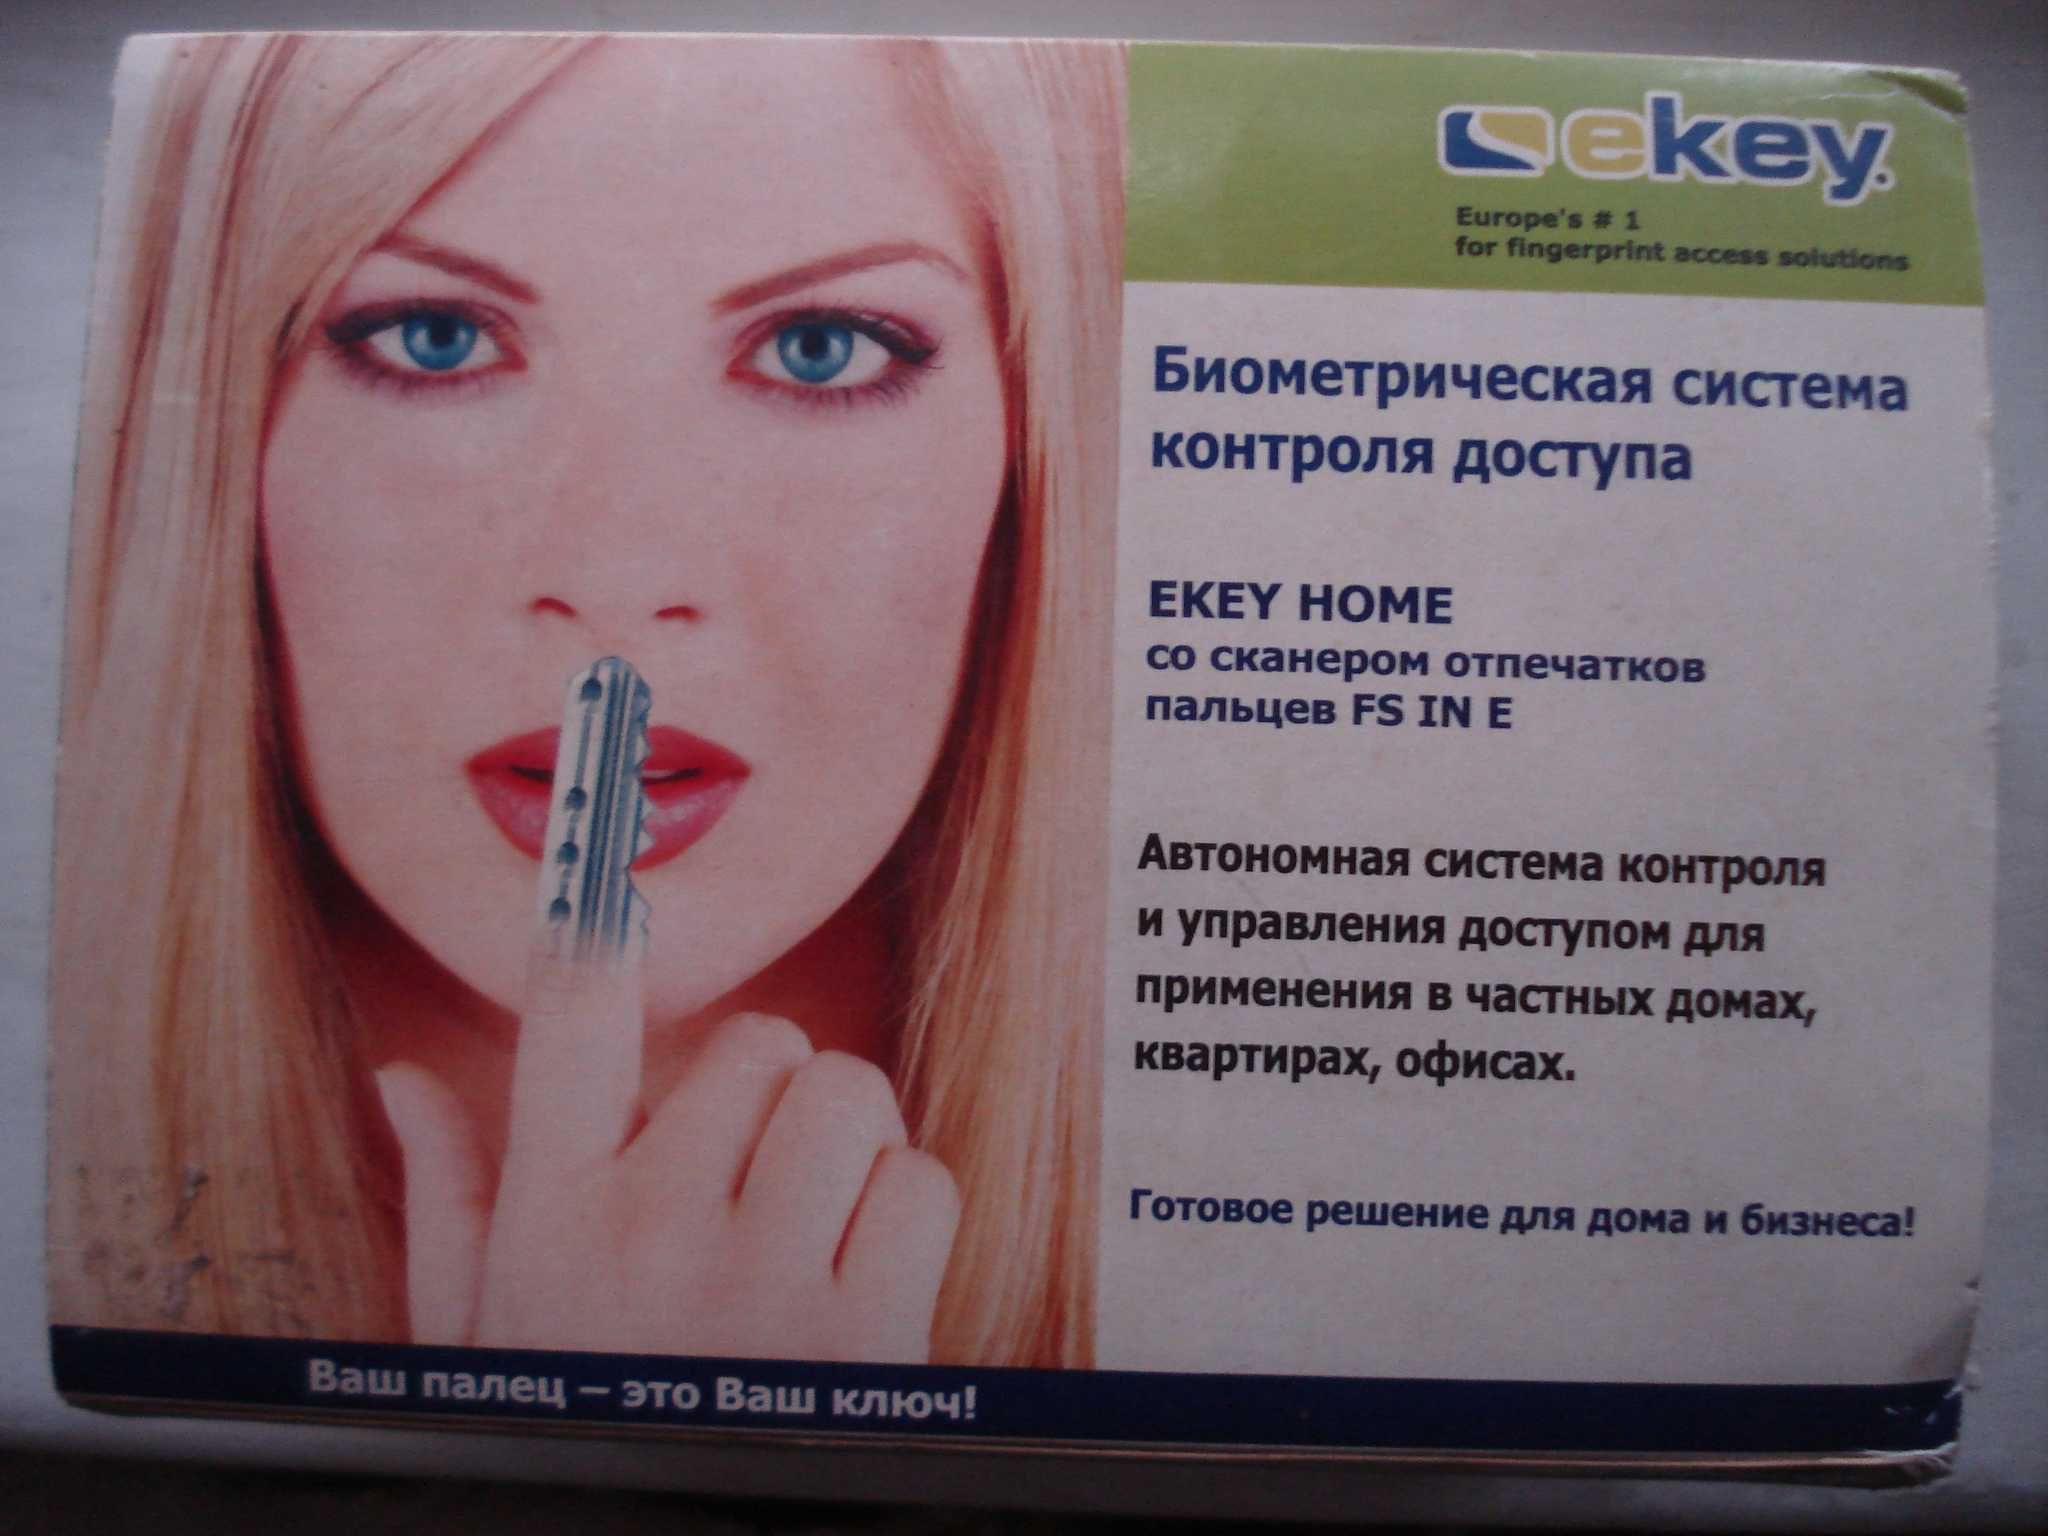 Система биометрического доступа E-KEY